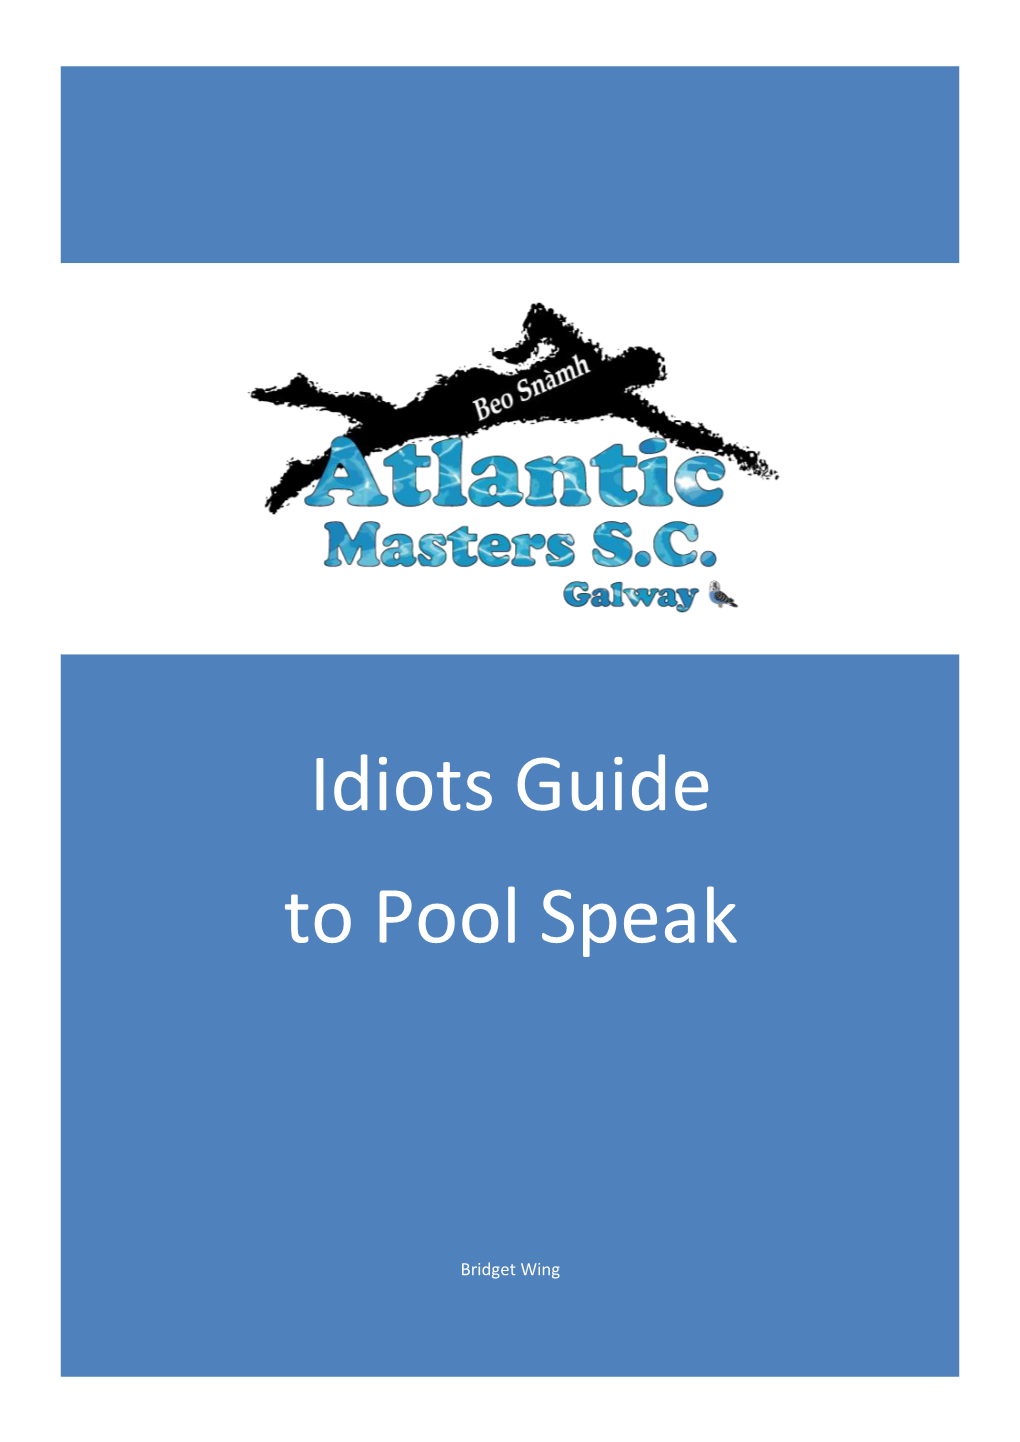 Idiots Guide to Pool Speak